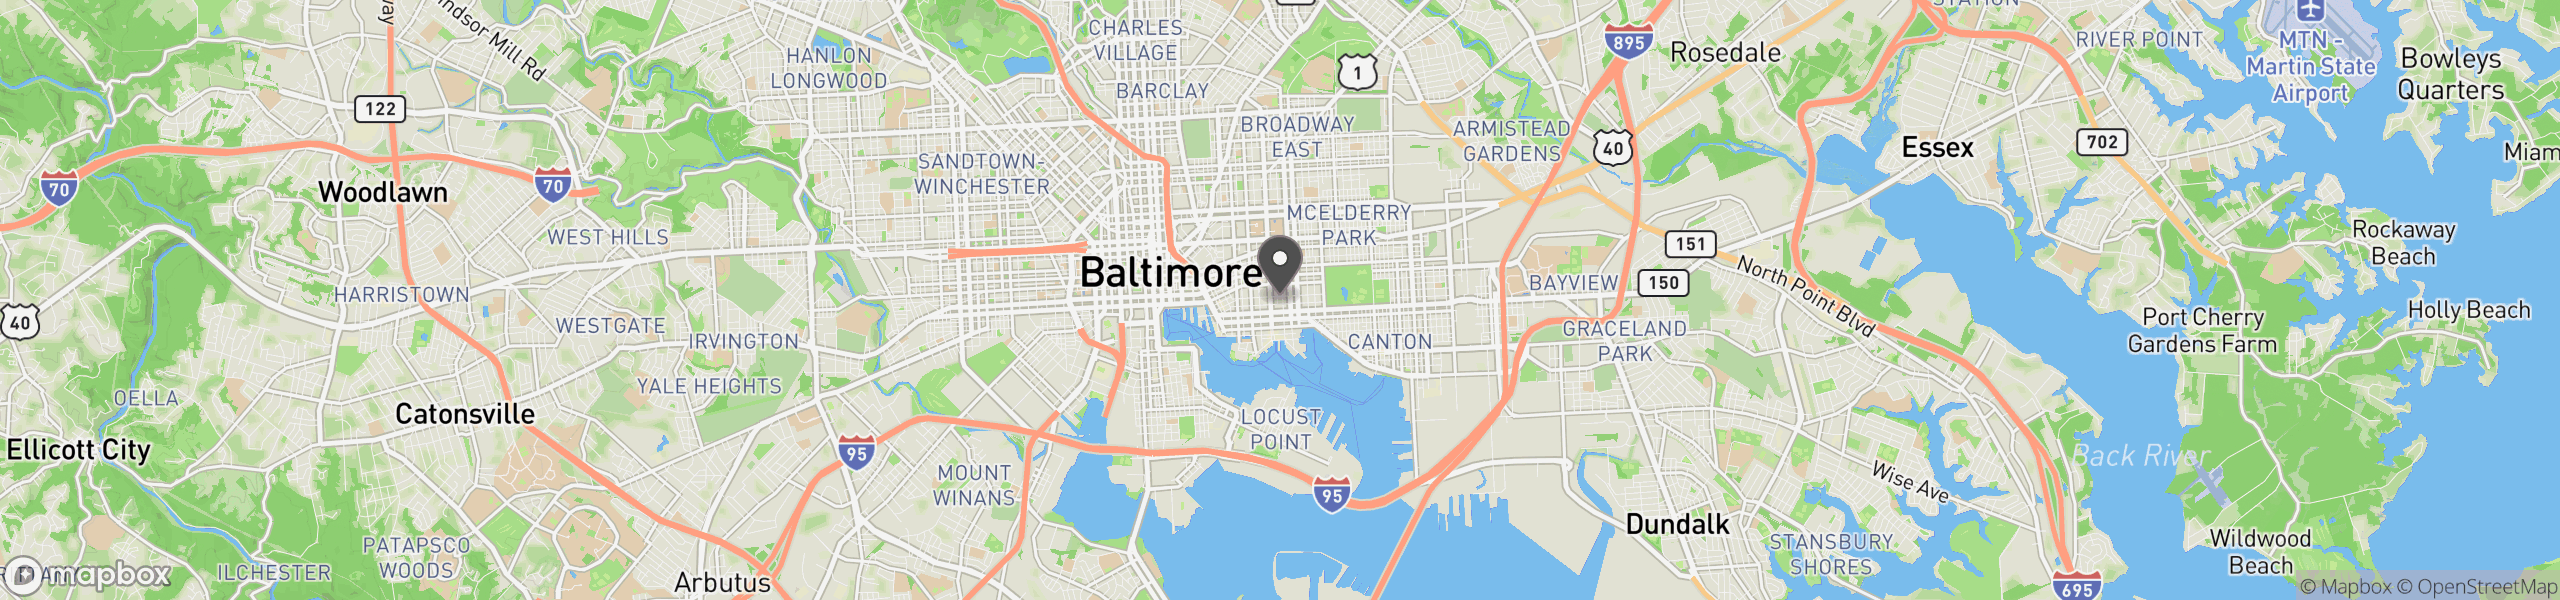 Baltimore, MD 21231